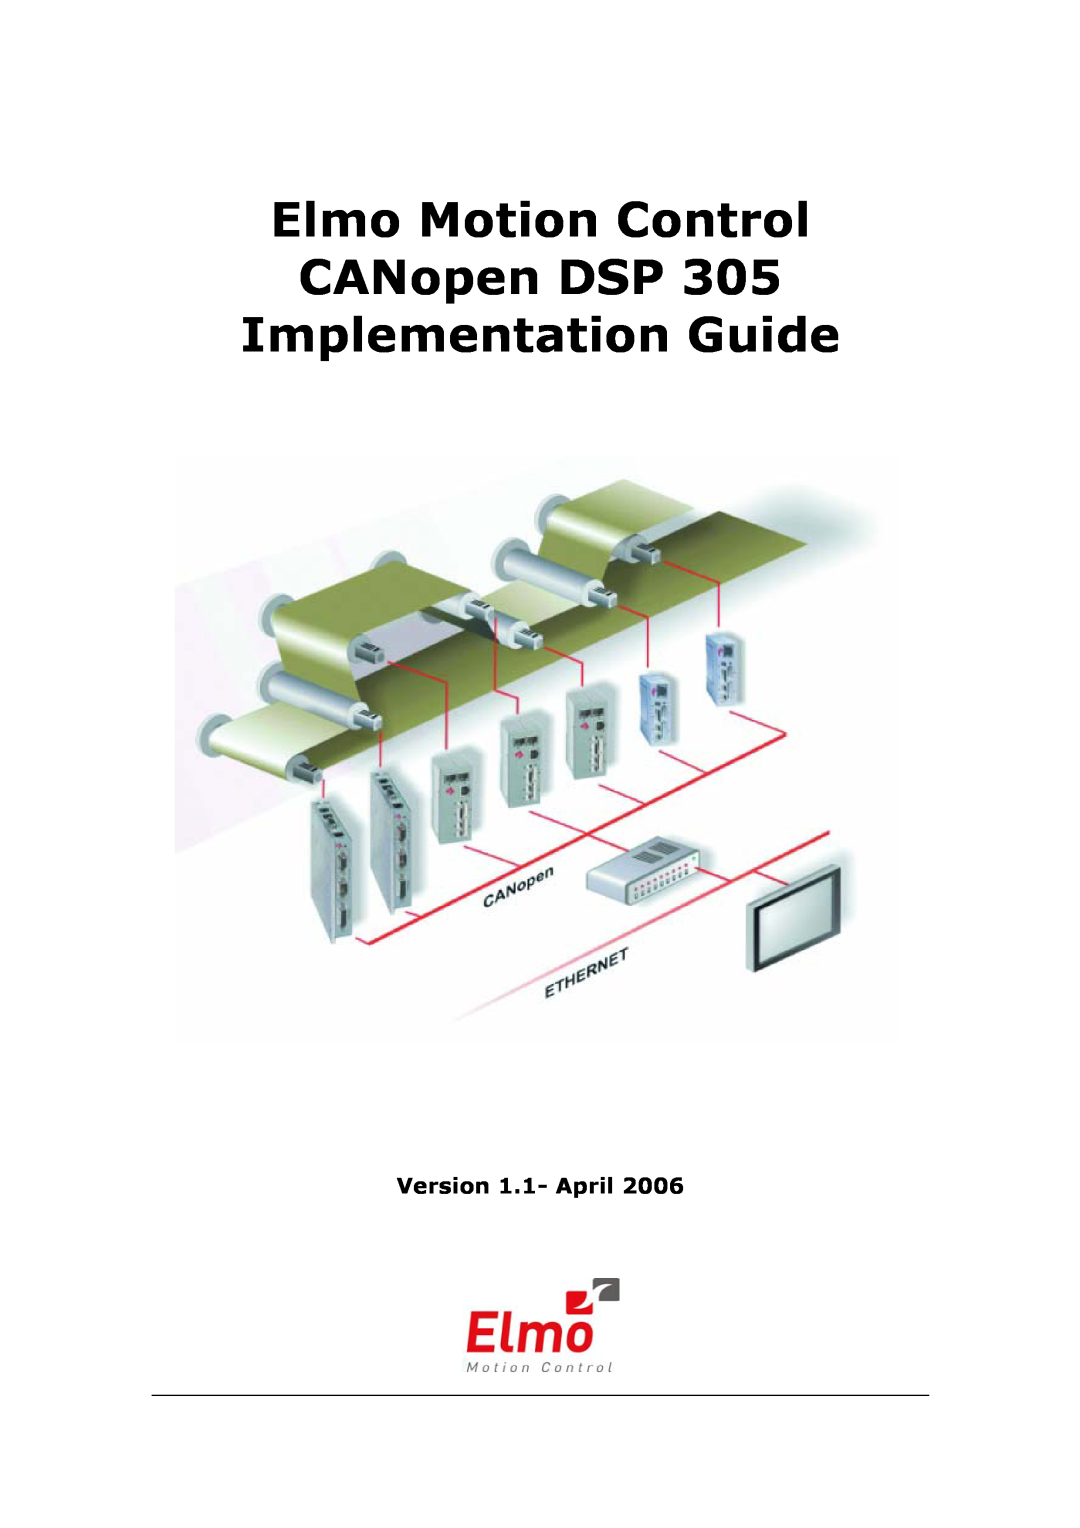 Elmo DSP 305 manual Elmo Motion Control CANopen DSP, Implementation Guide, Version 1.1- April 